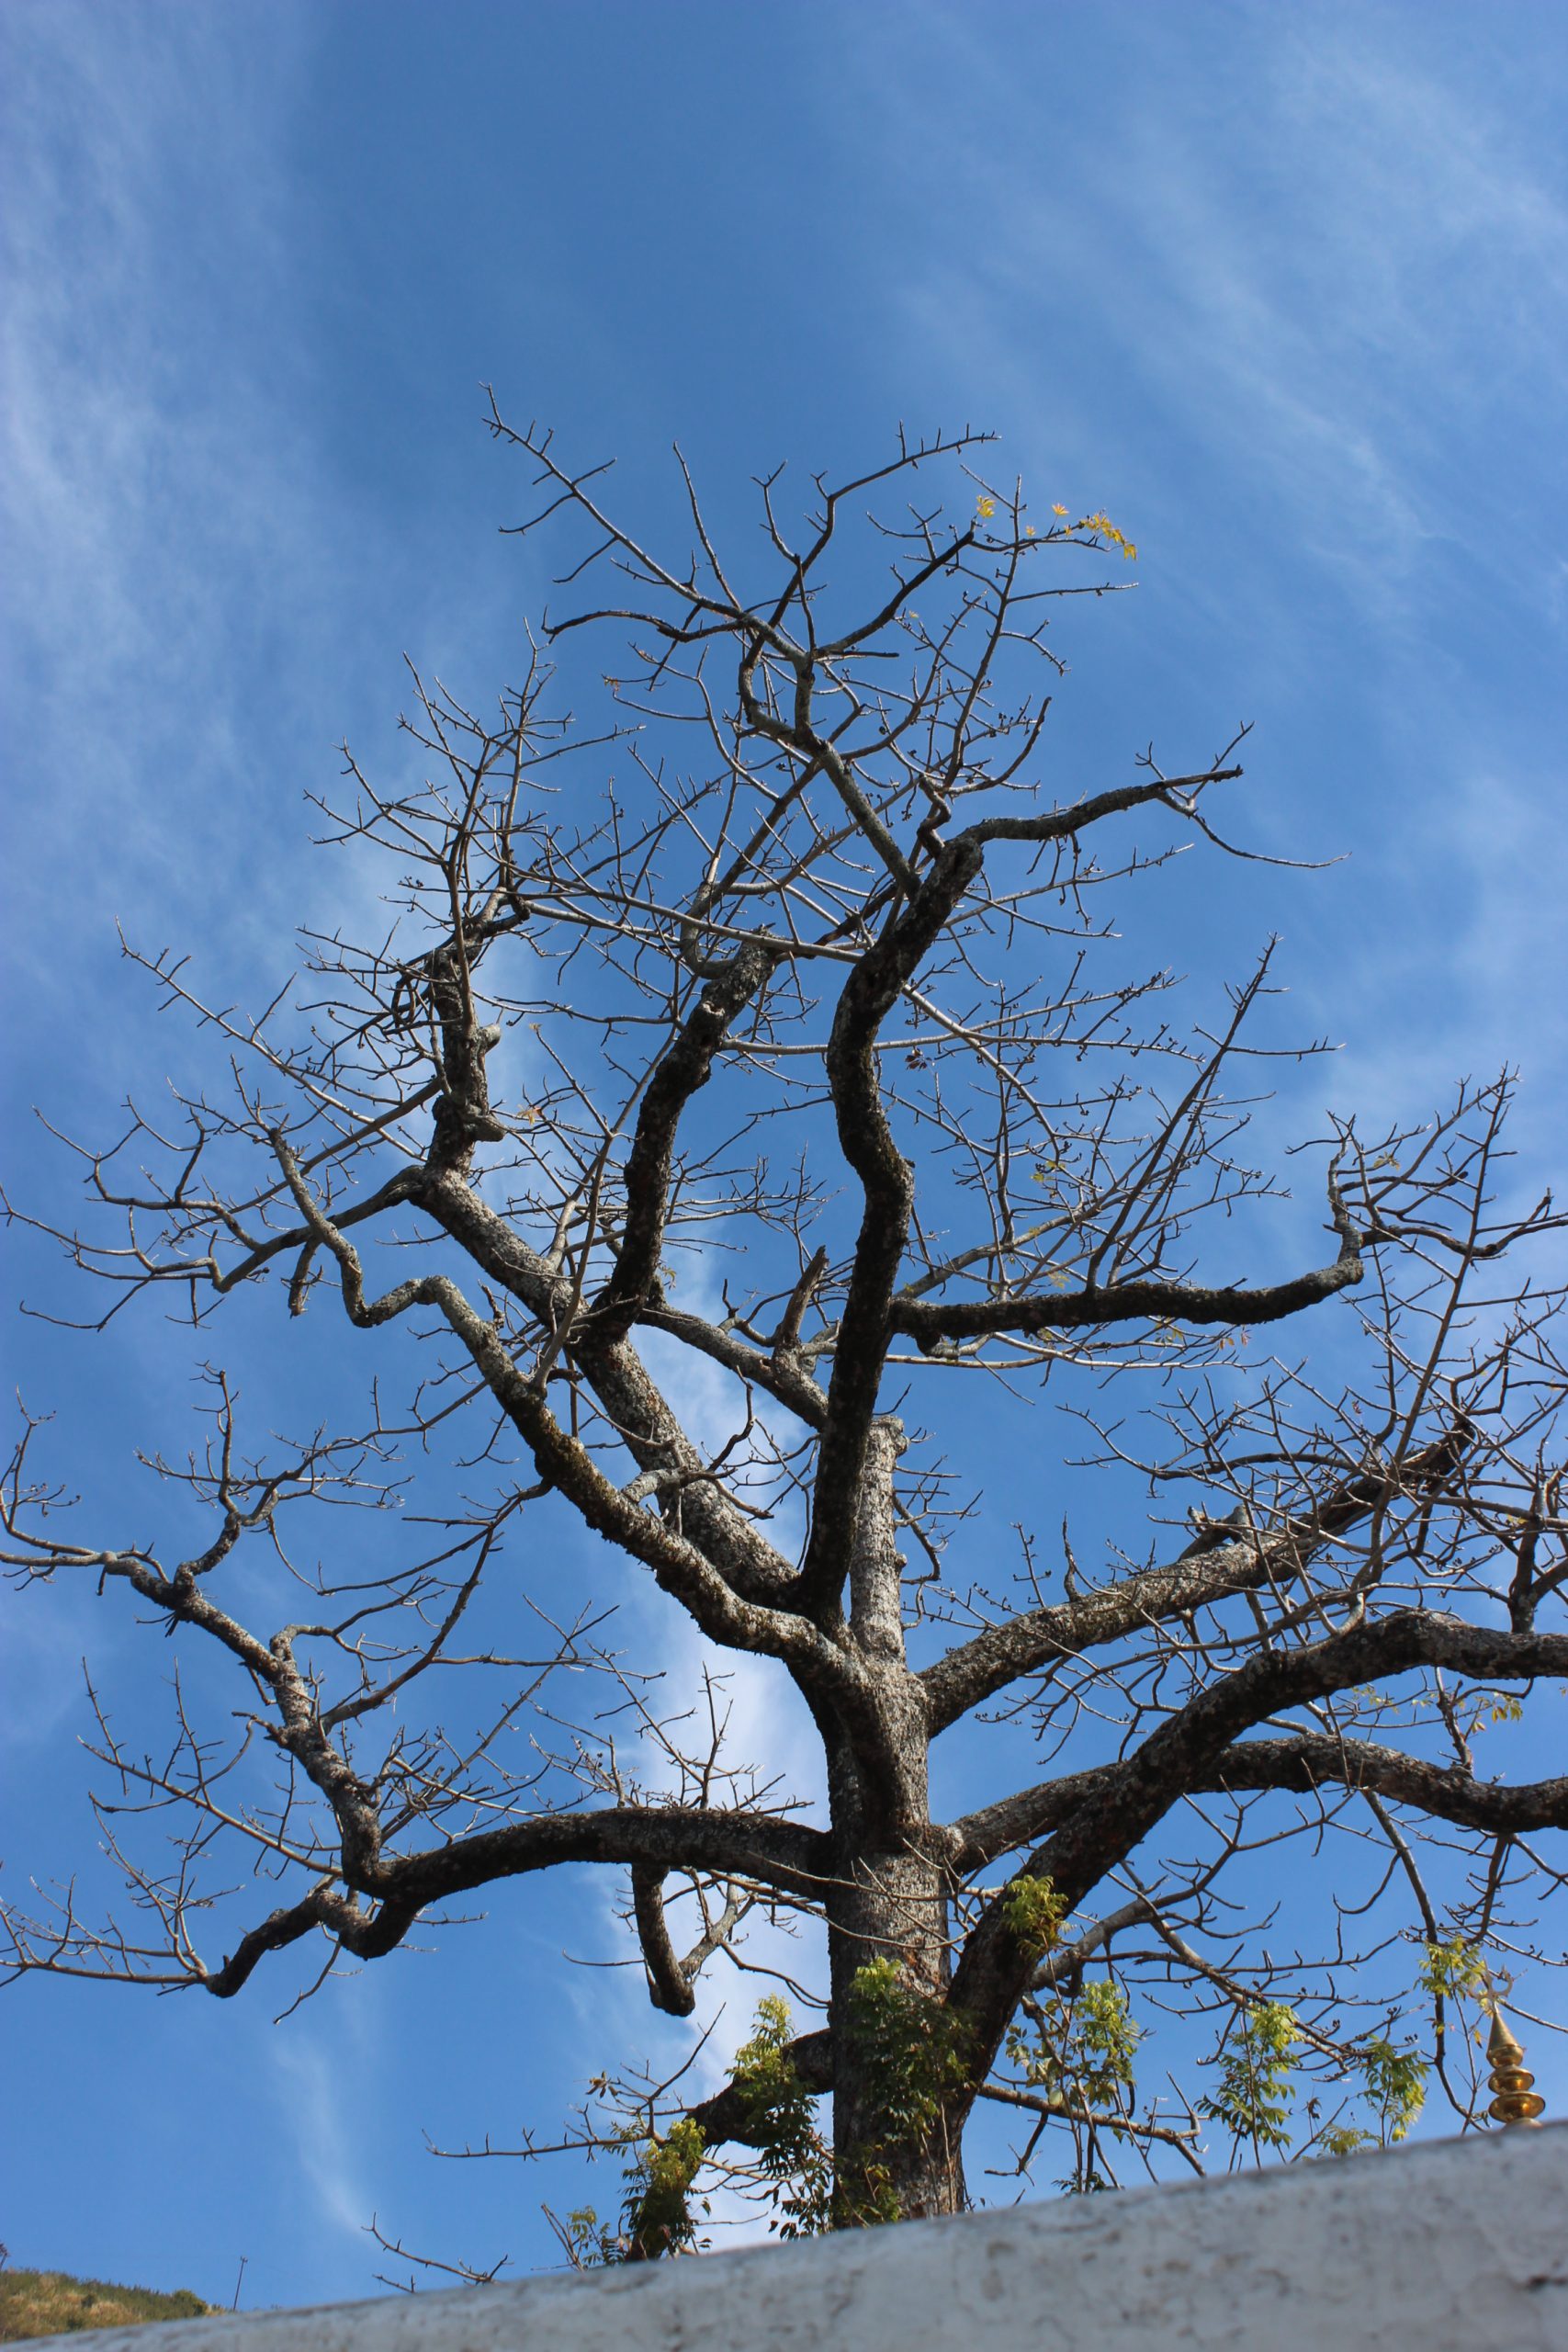 A dry tree